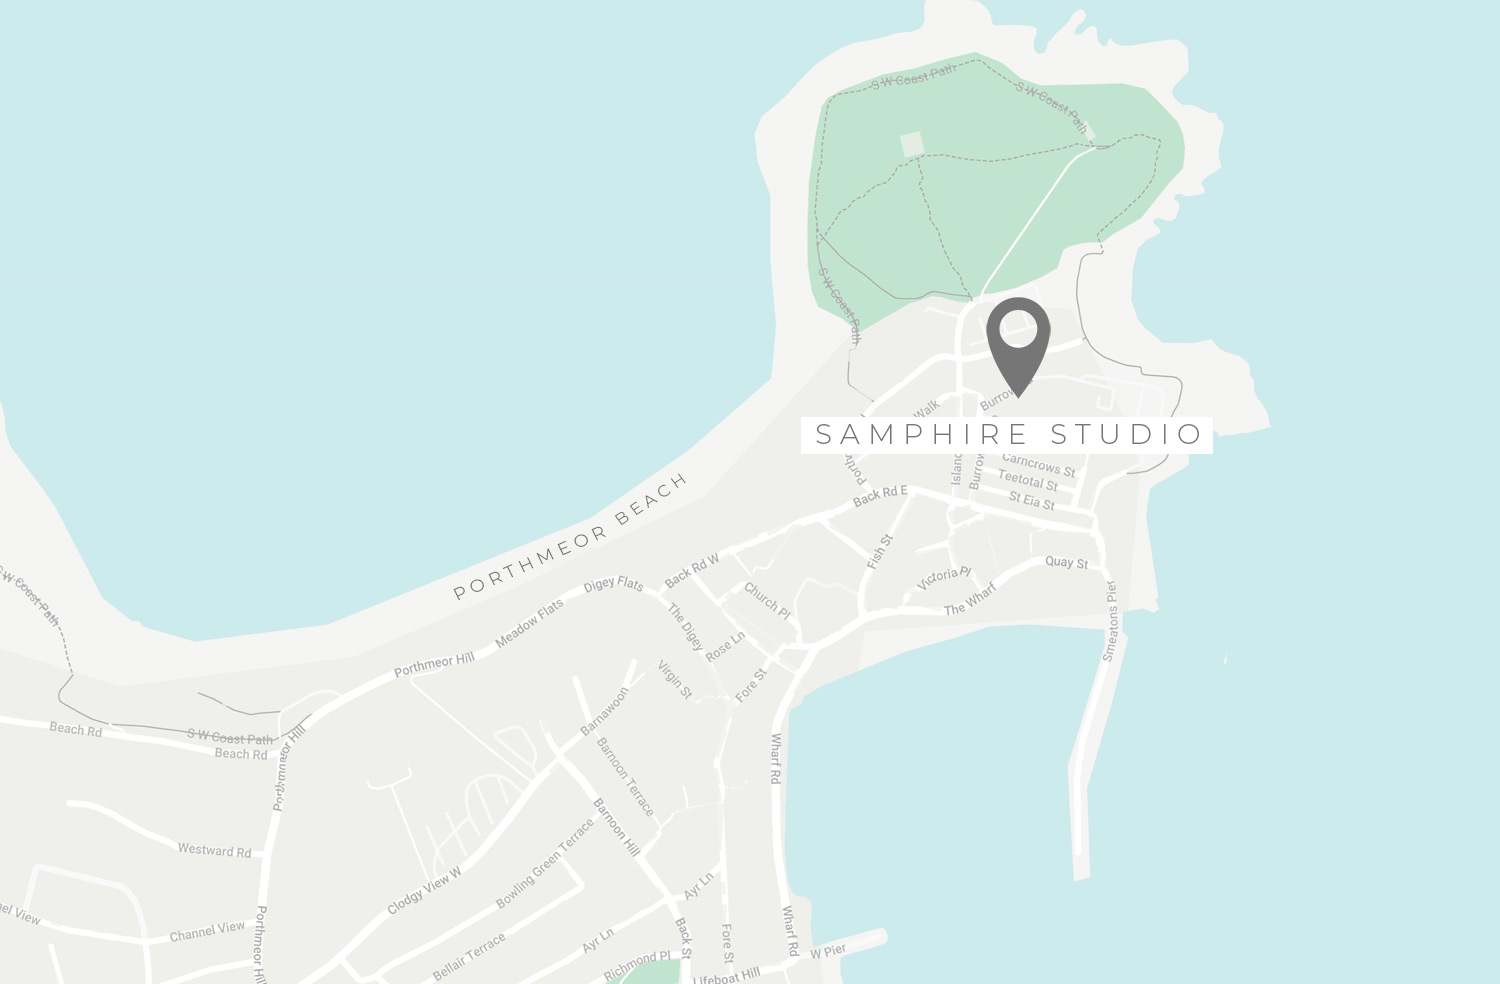 Samphire-studio-map